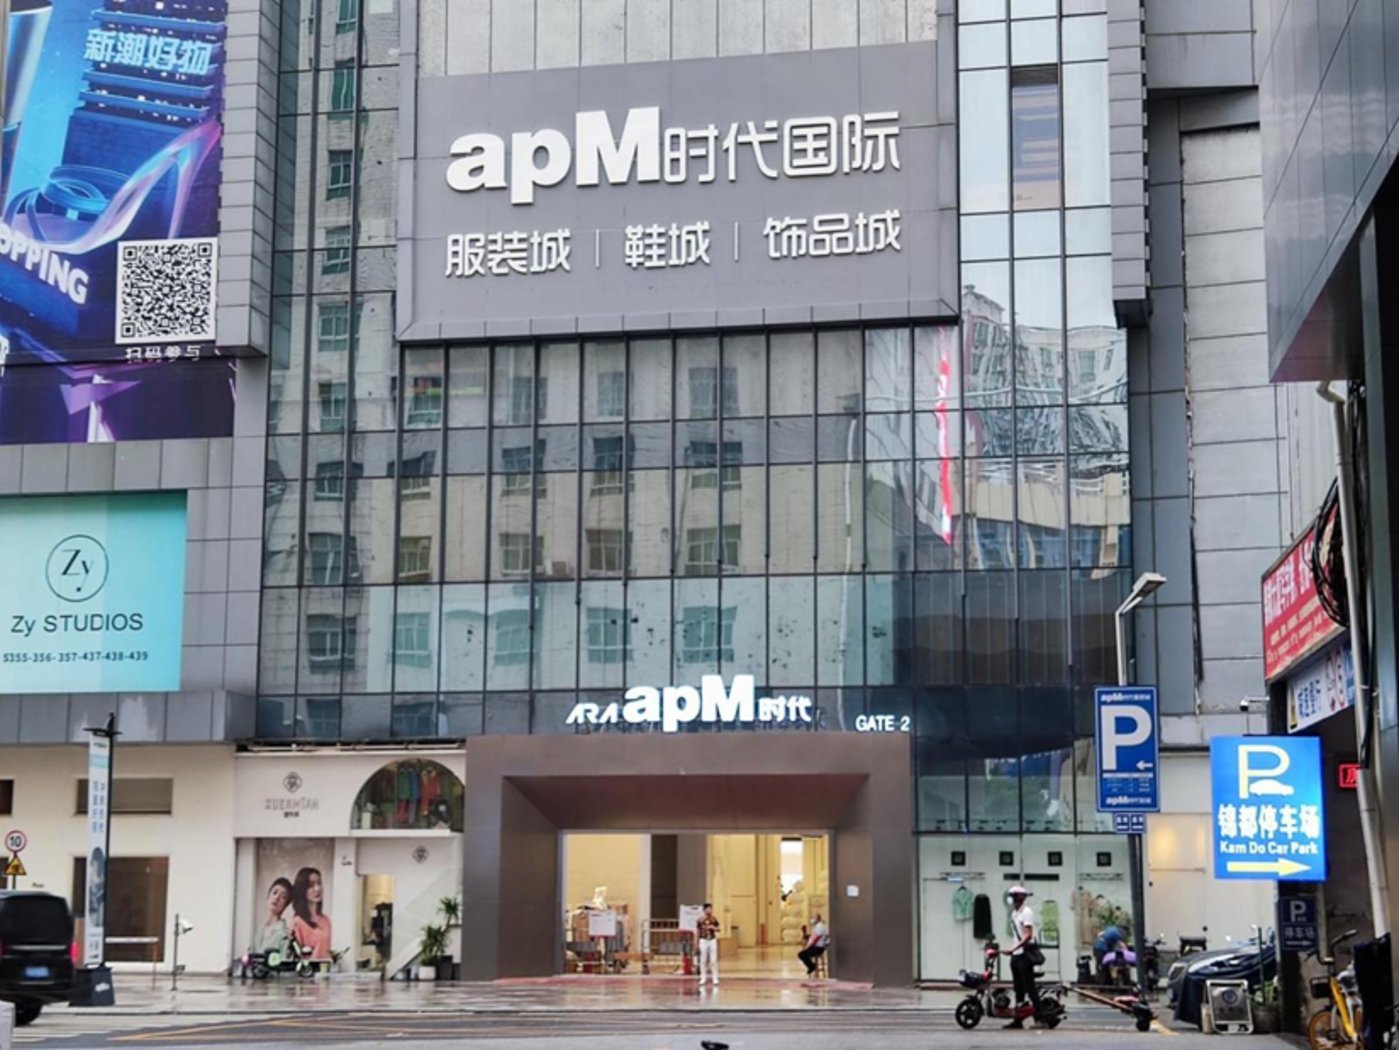 apM，欲成为广州的服装直播基地，很多十三行大店都在此有档口